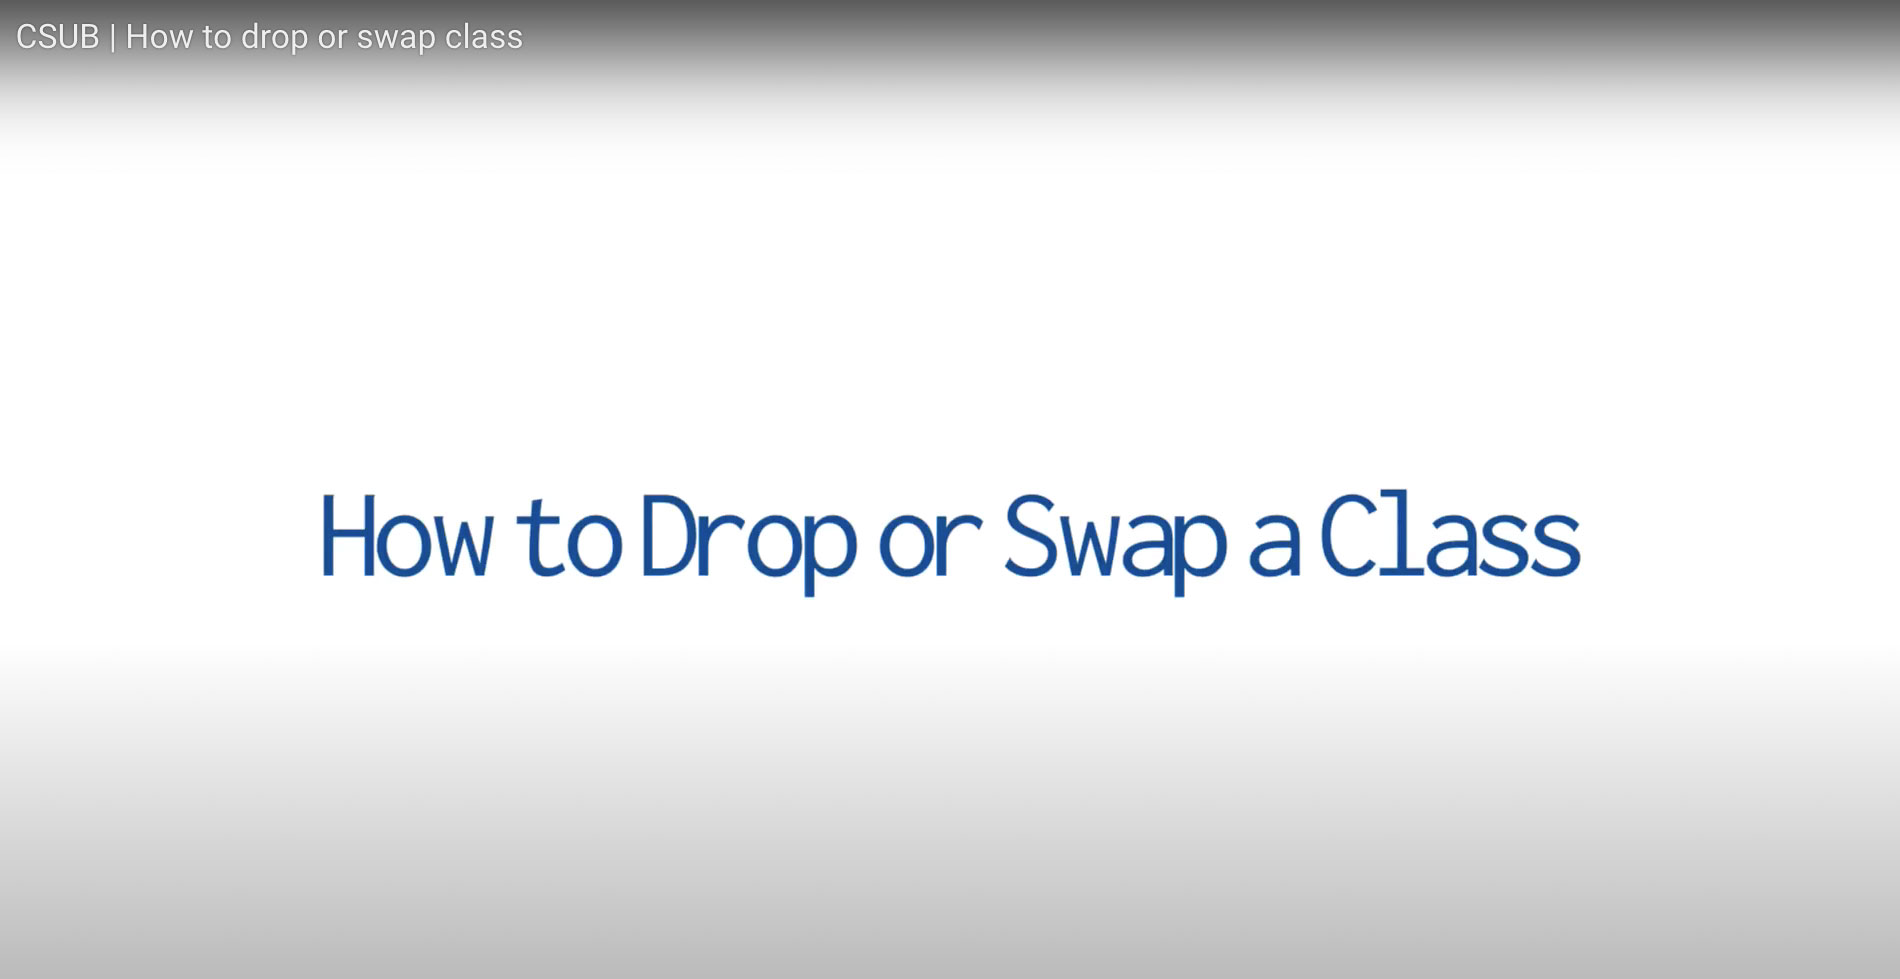 How to Drop/Swap a Class